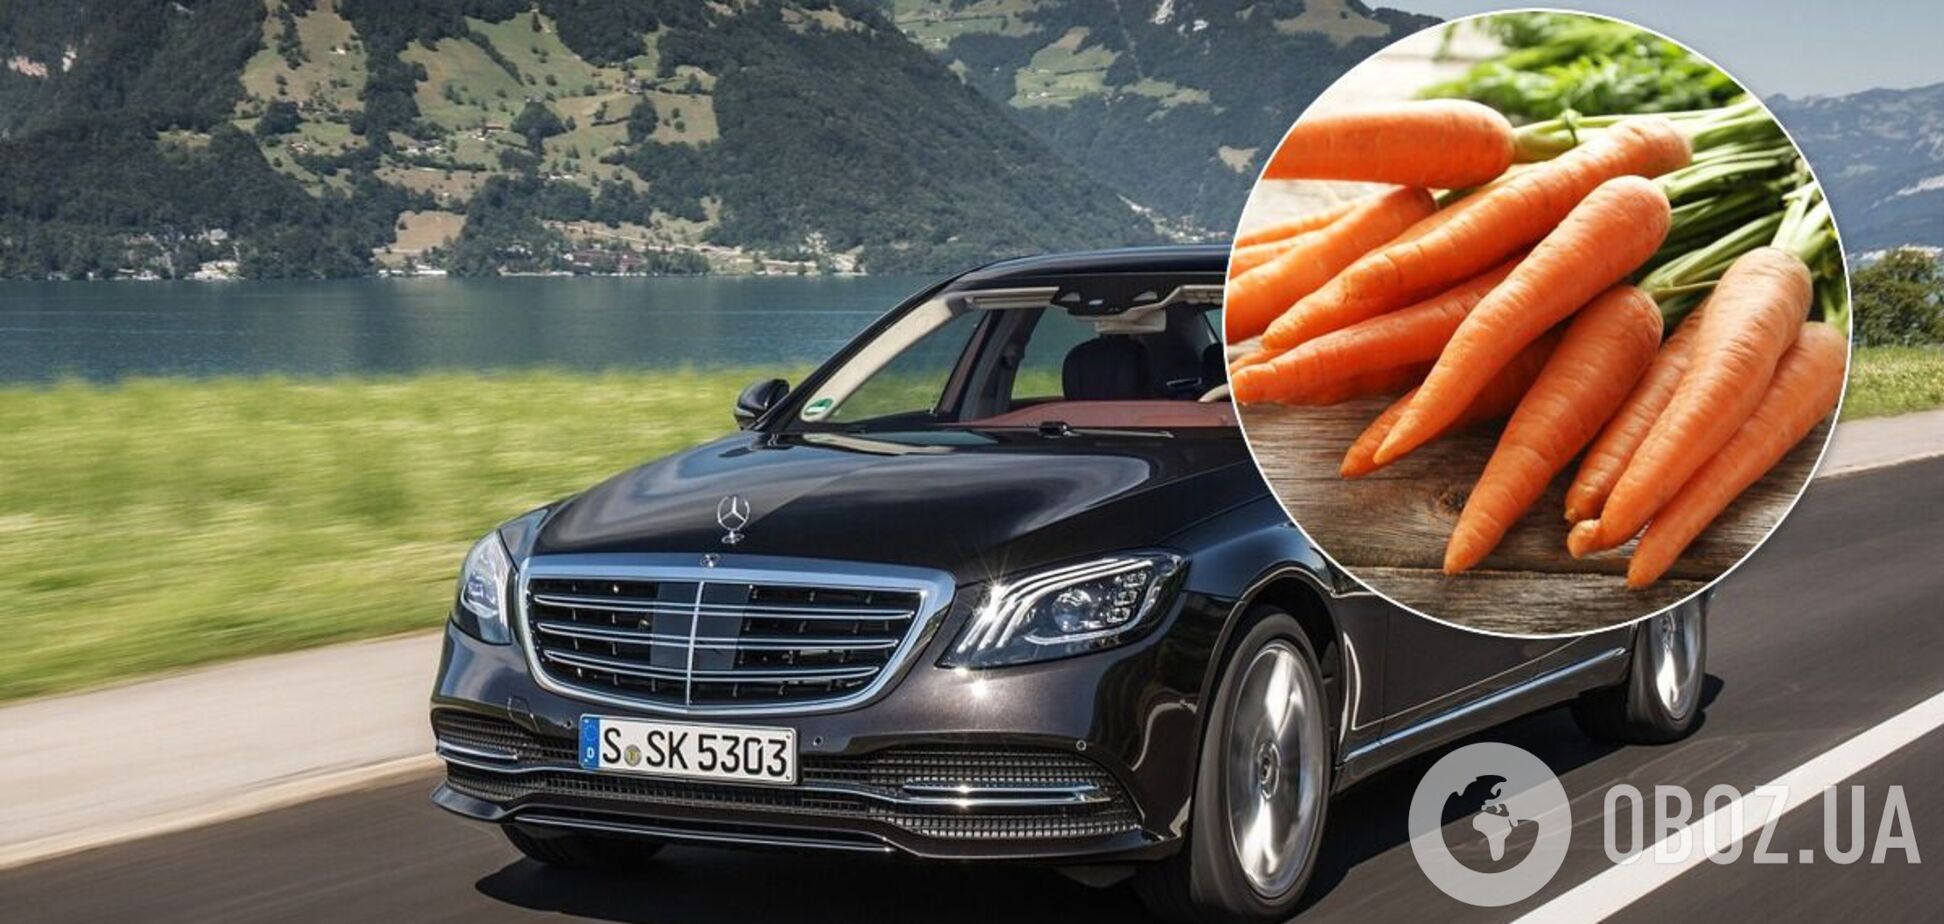 В Киеве заметили Mercedes S-Class, груженый мешками моркови